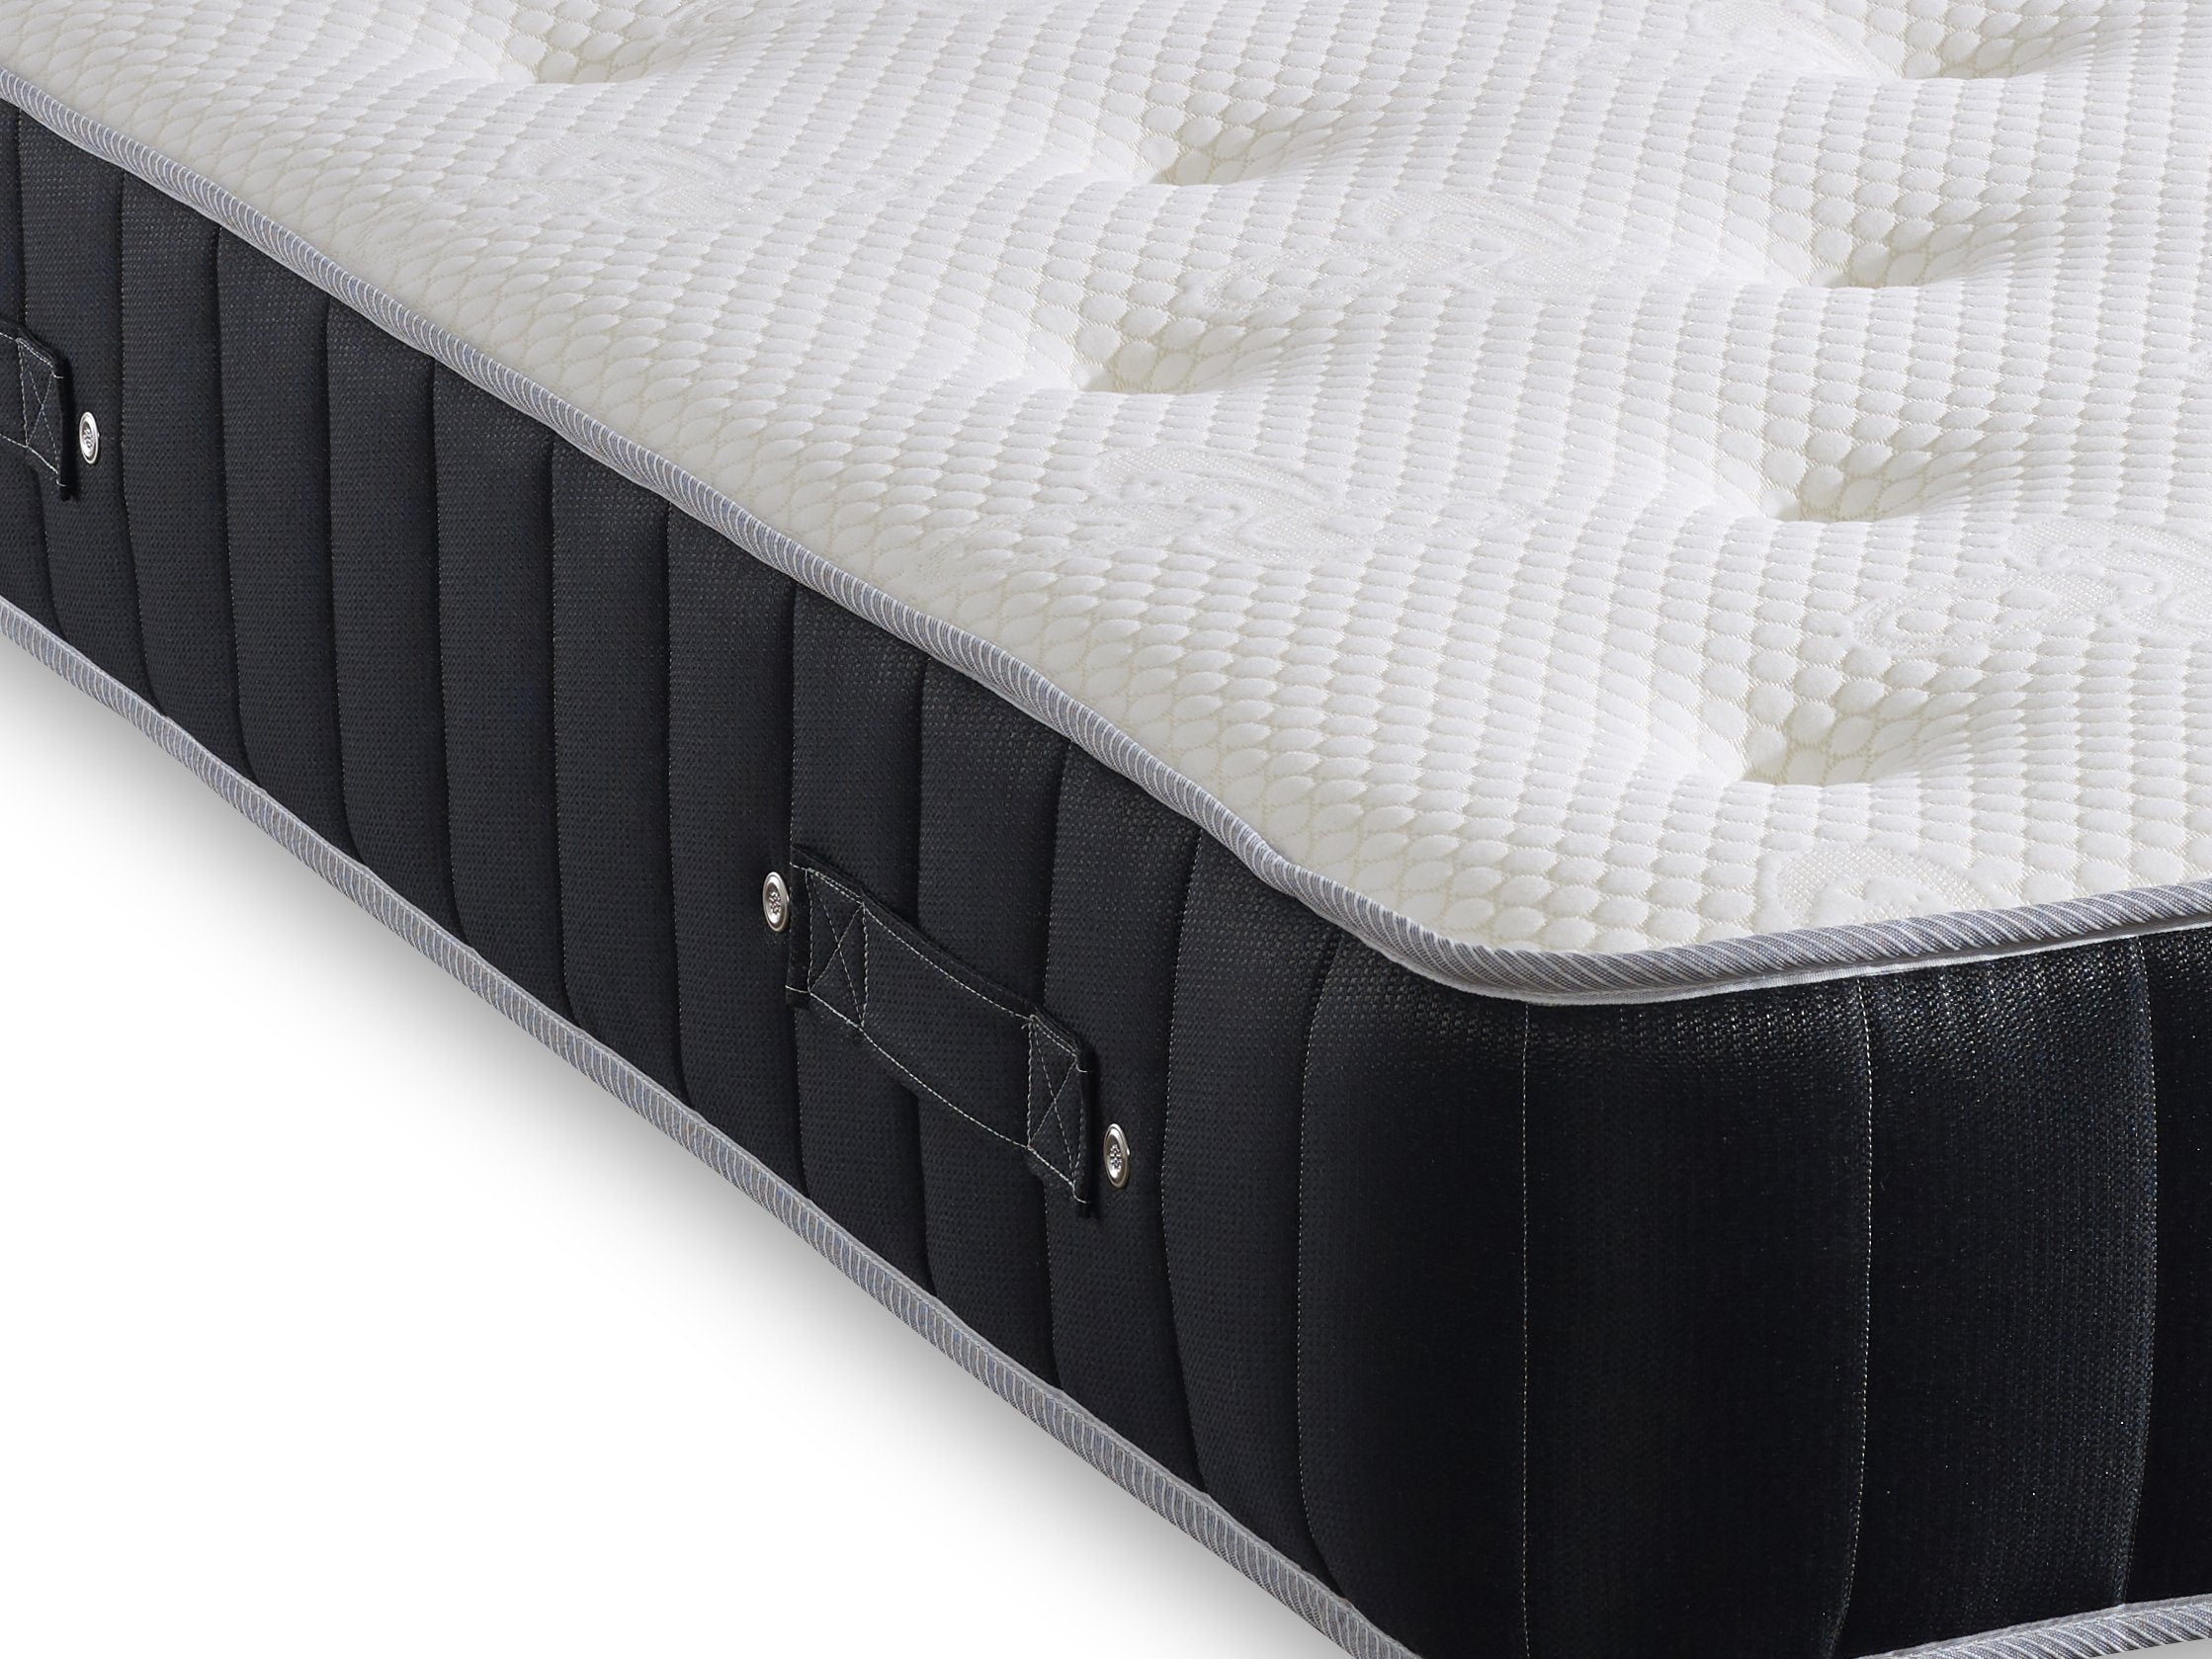 2000 pocket sprung memory foam mattress double